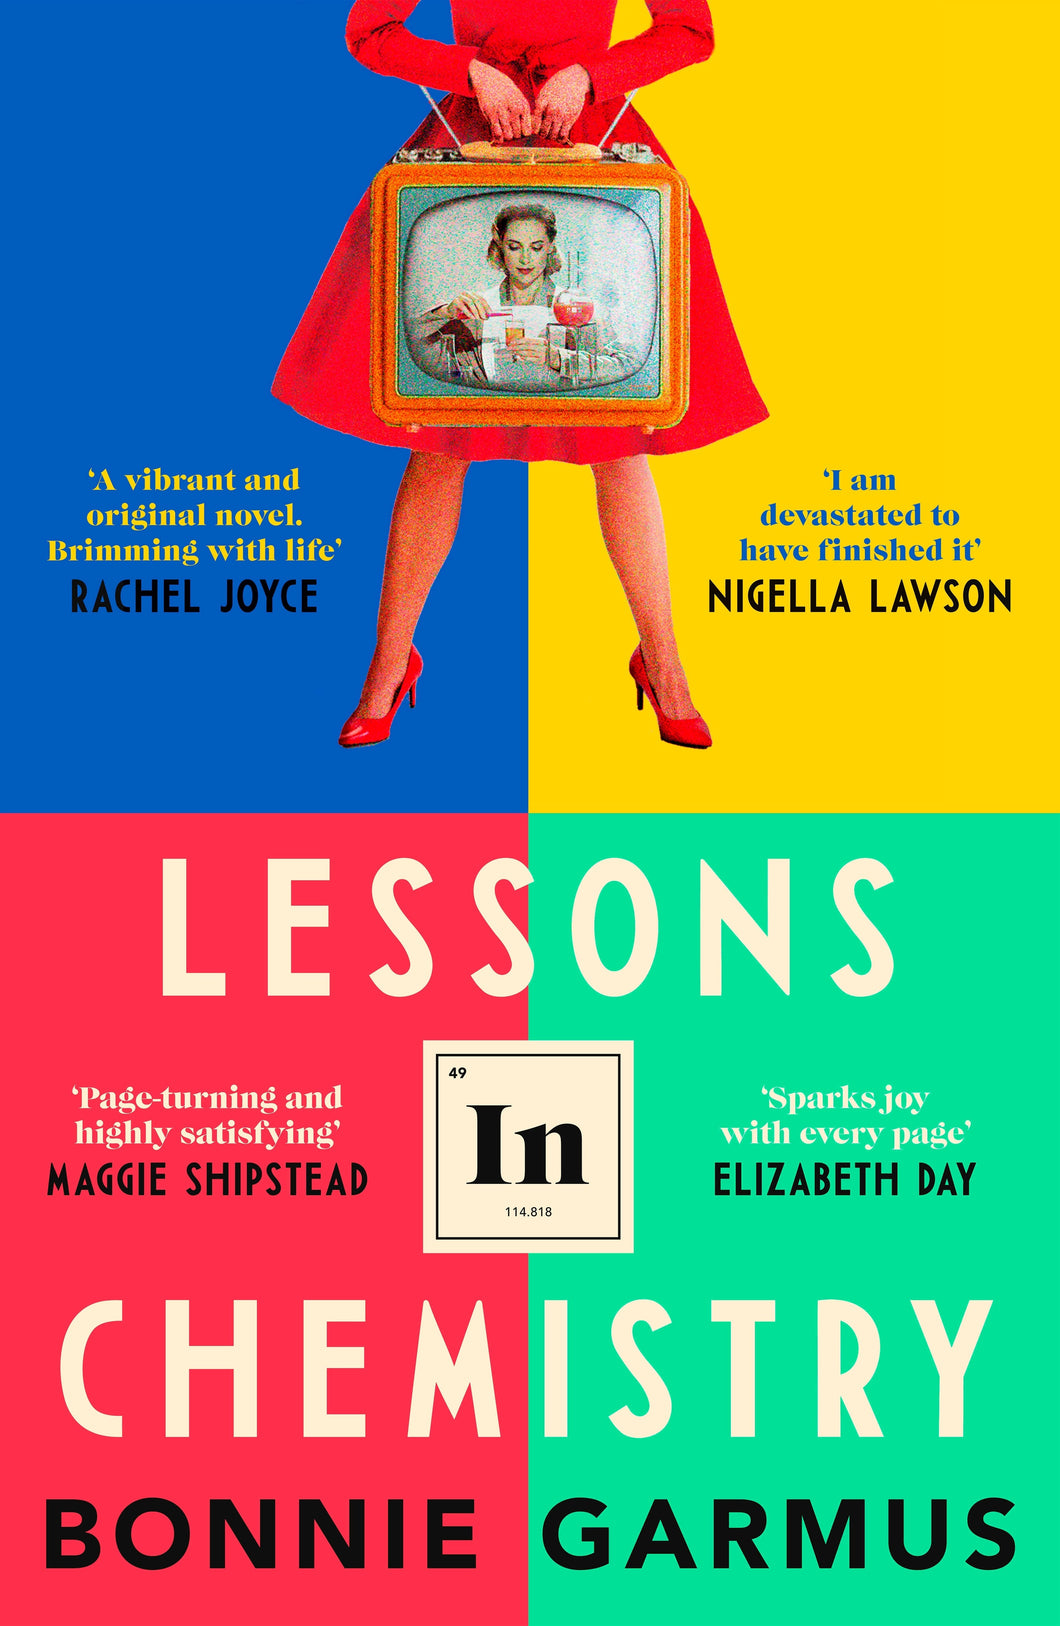 Lessons in Chemistry by Bonnie Garmus